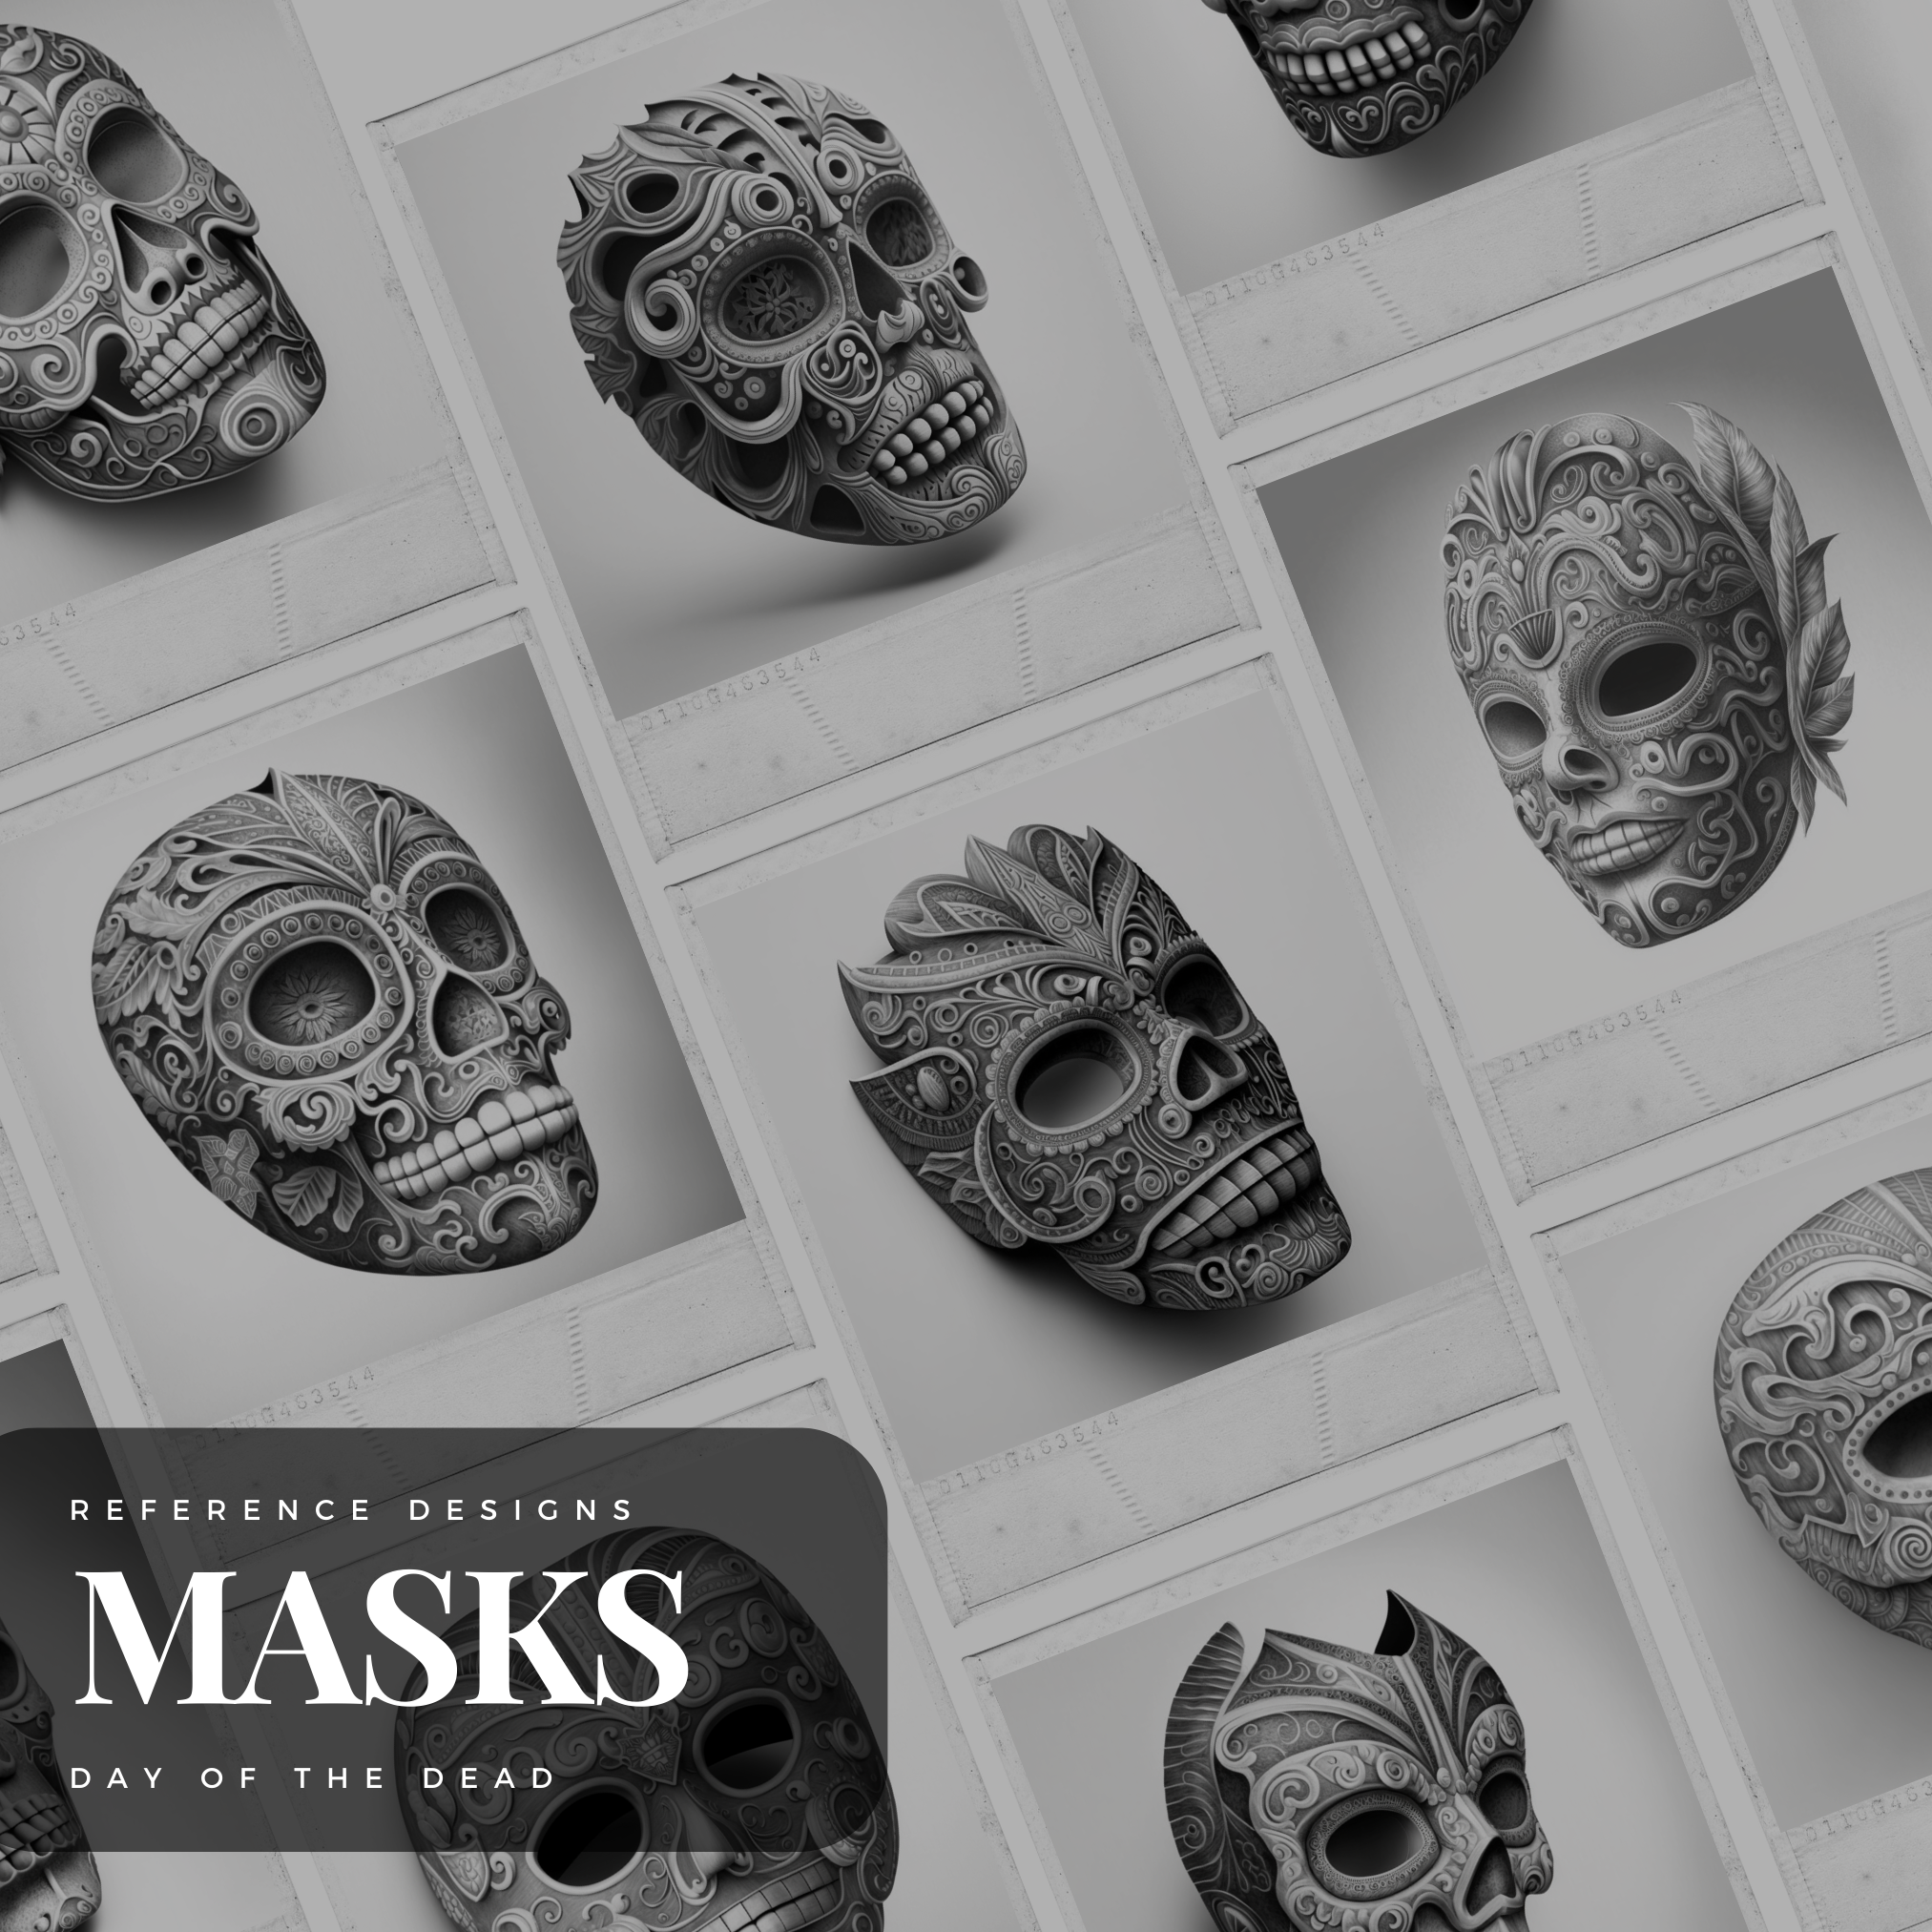 Day of the Dead Masks Digital Reference Design Collection: 50 Procreate & Sketchbook Images